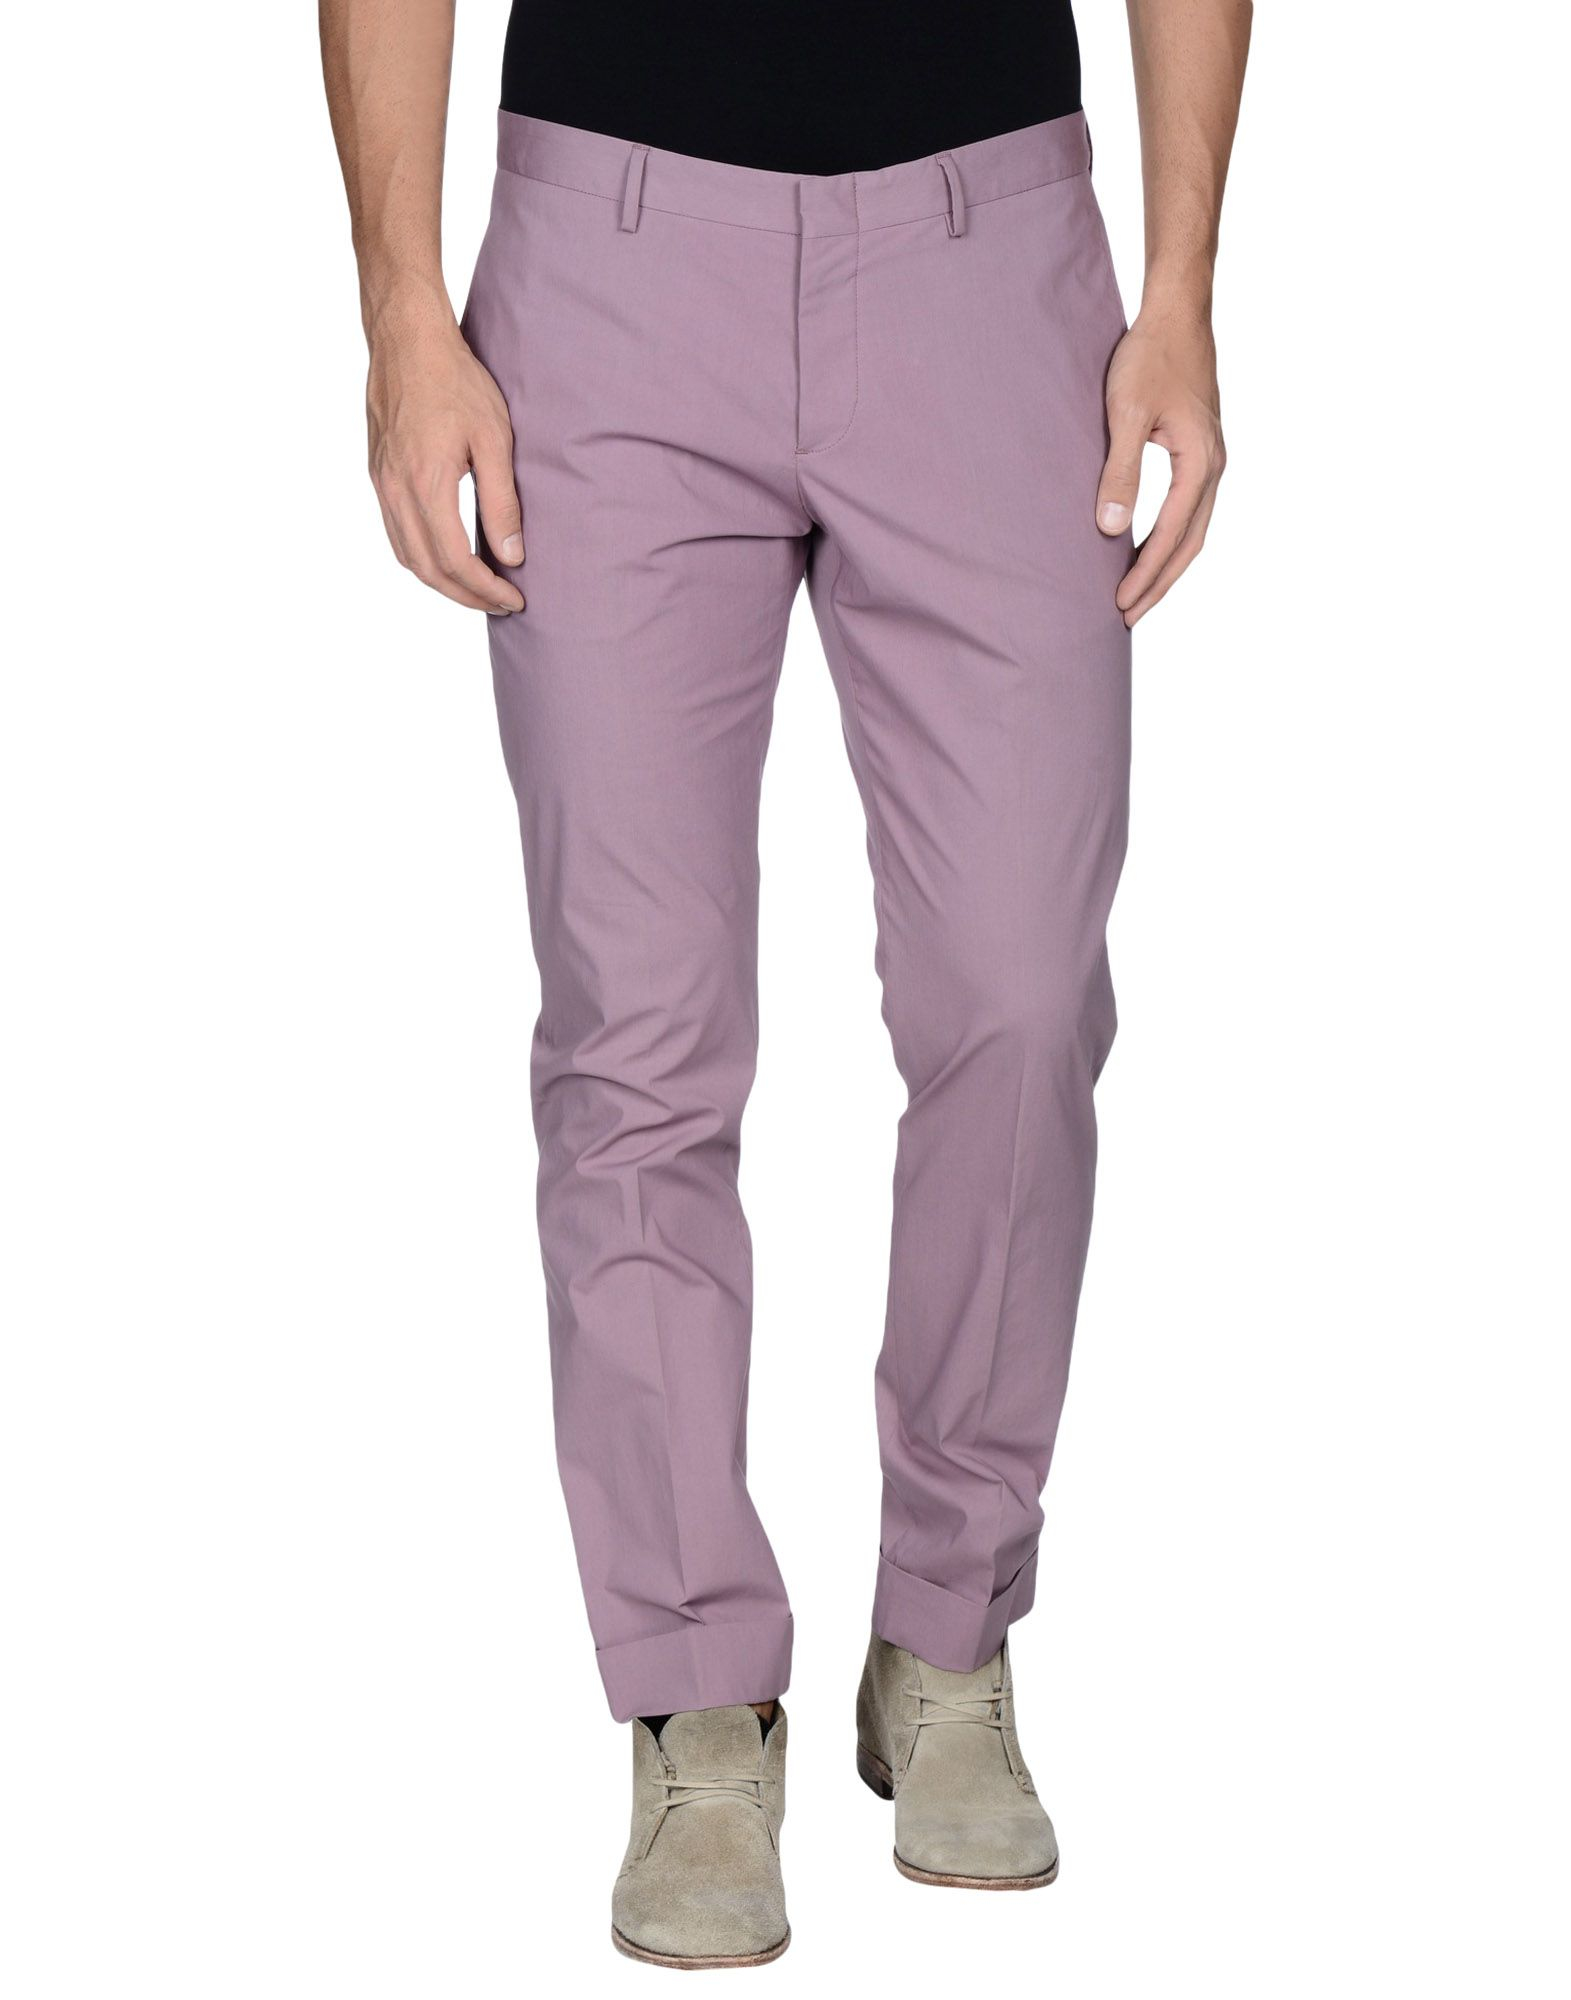 Gucci Casual Pants in Light Purple (Purple) for Men - Lyst